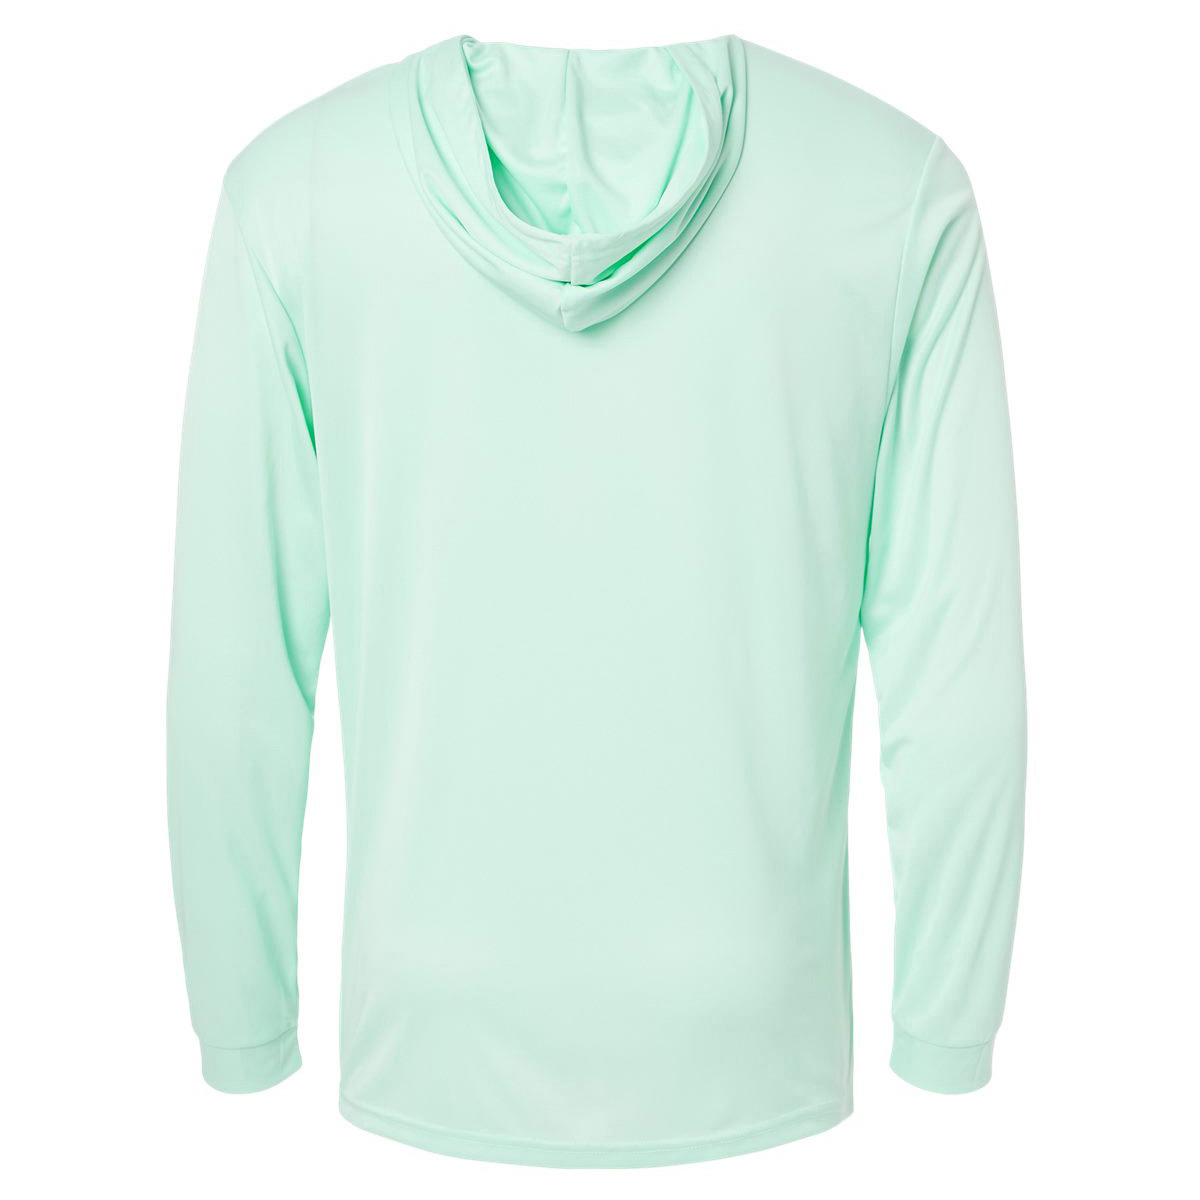 Paragon 220 - Bahama Performance Hooded Long Sleeve T-Shirt - Mint Green XL